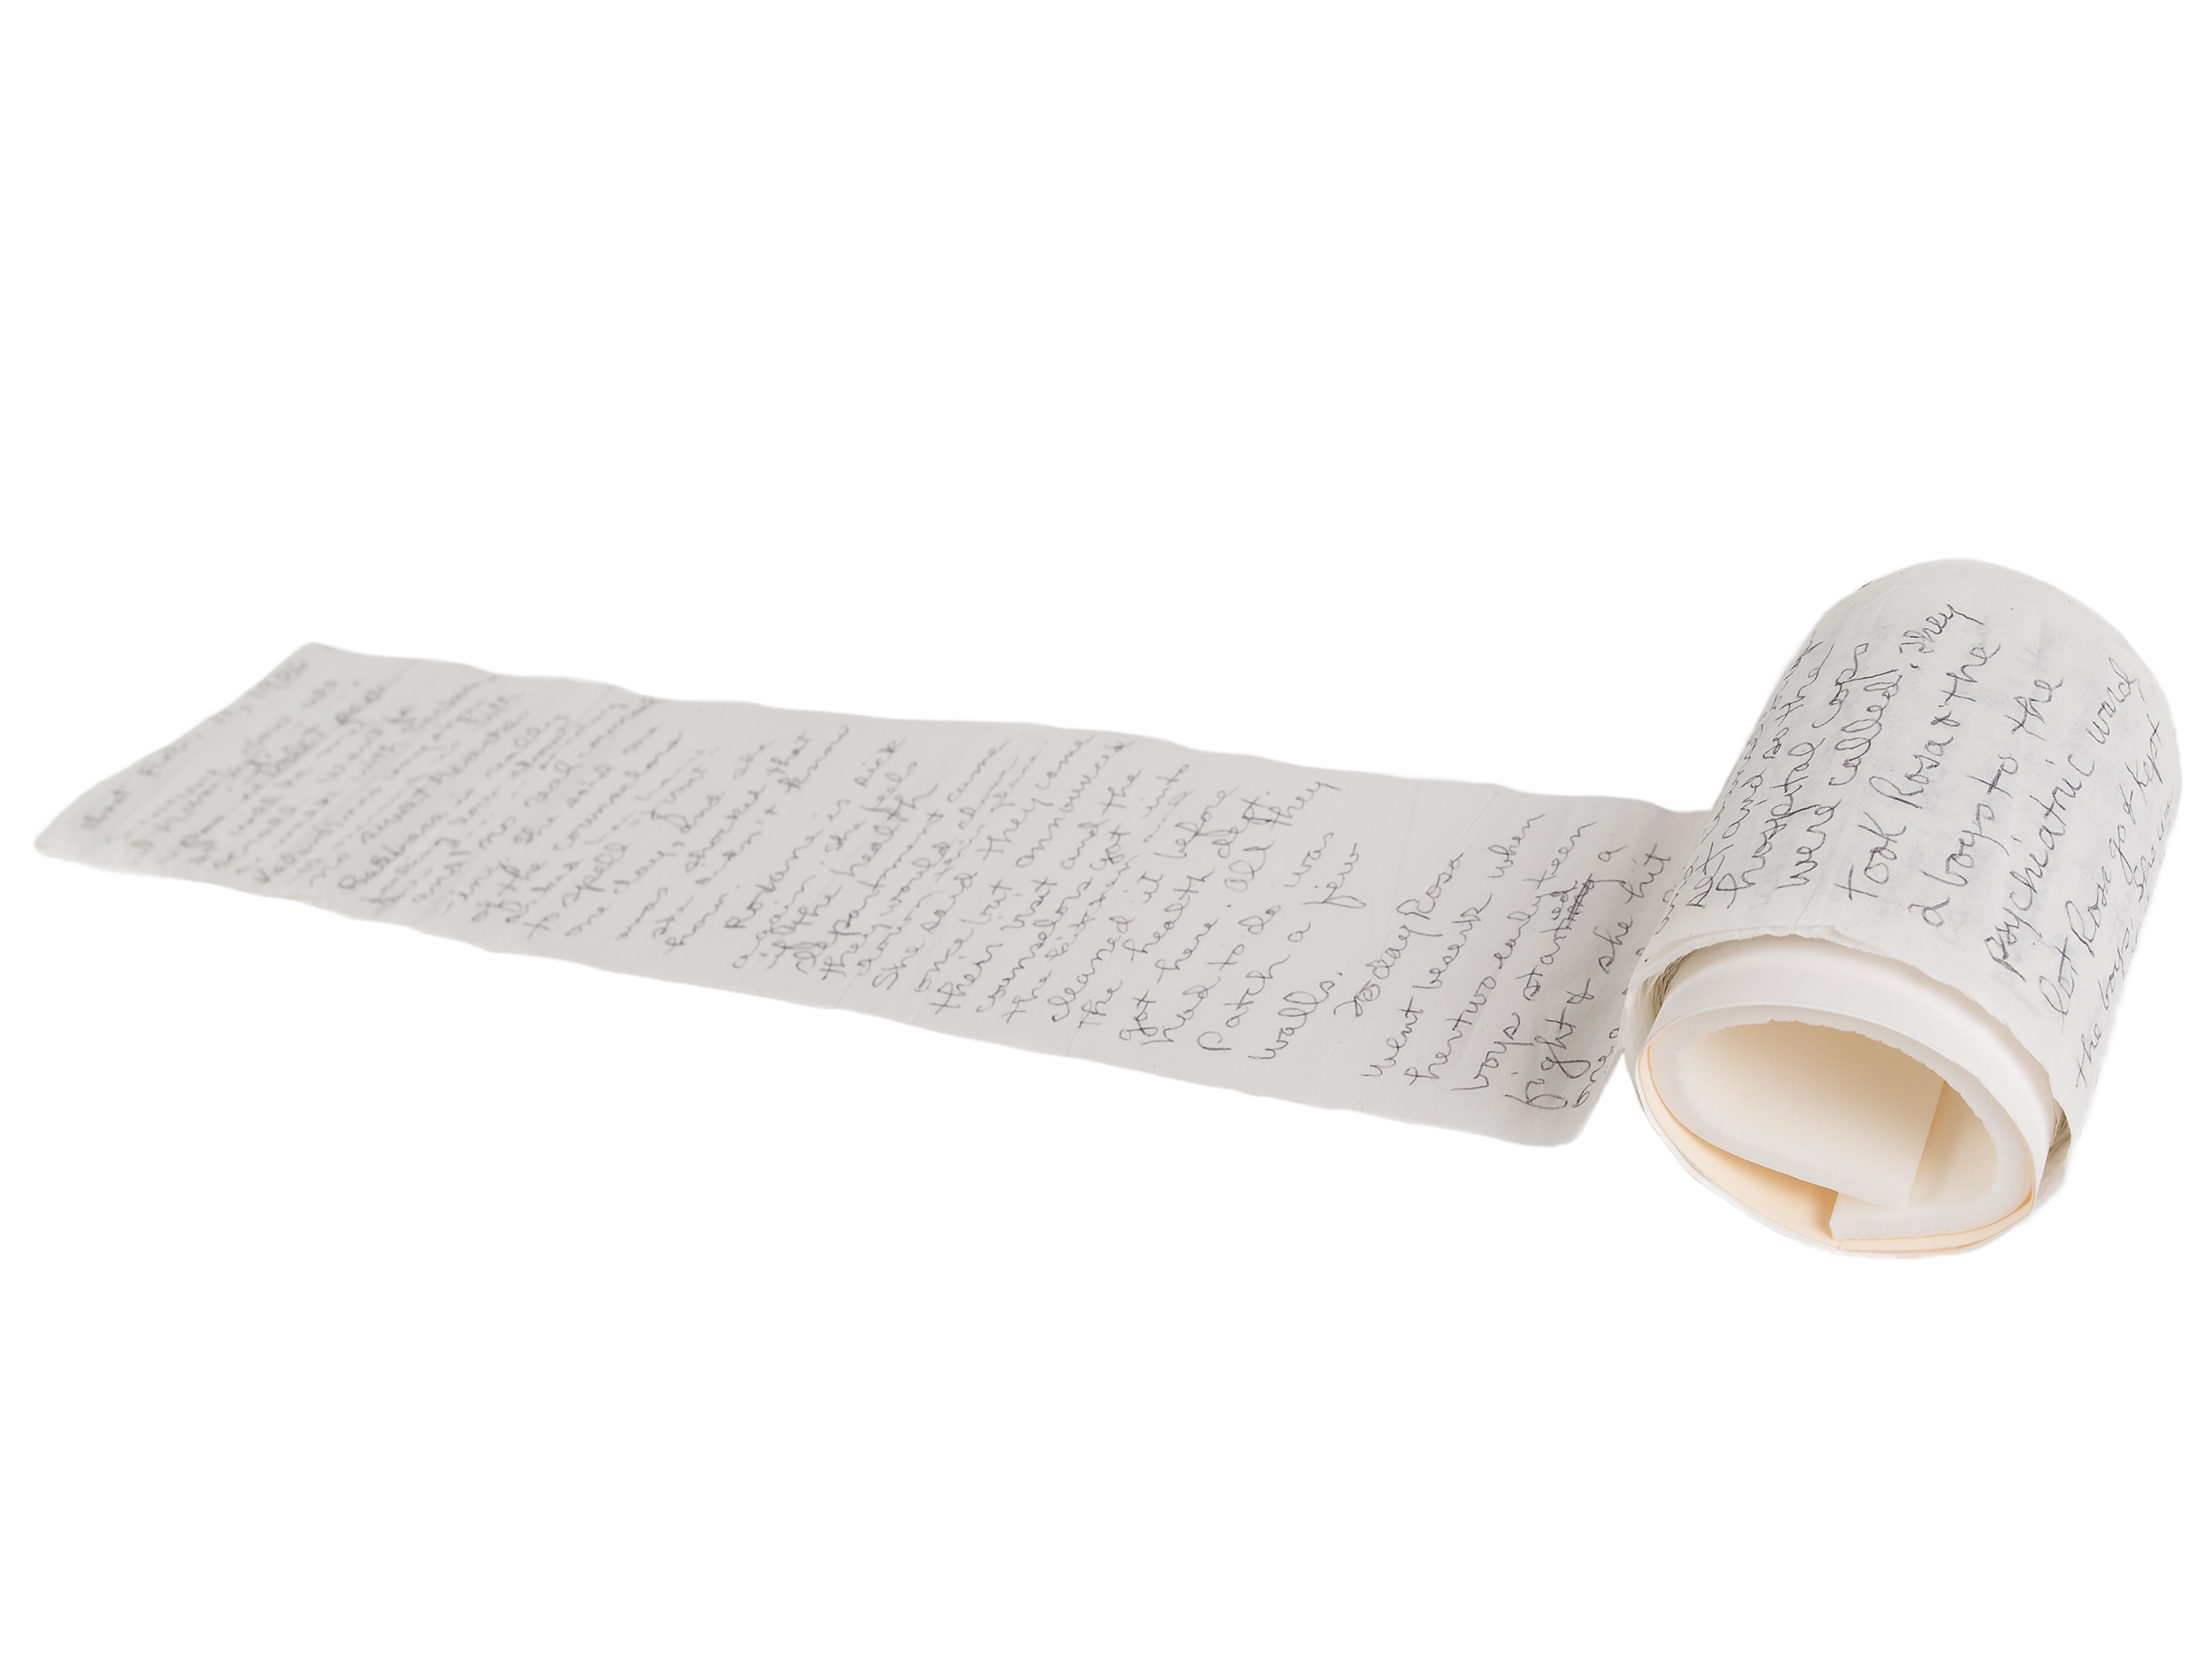 Eleanor Skelton Cash diary on rolls of toilet paper, 1986